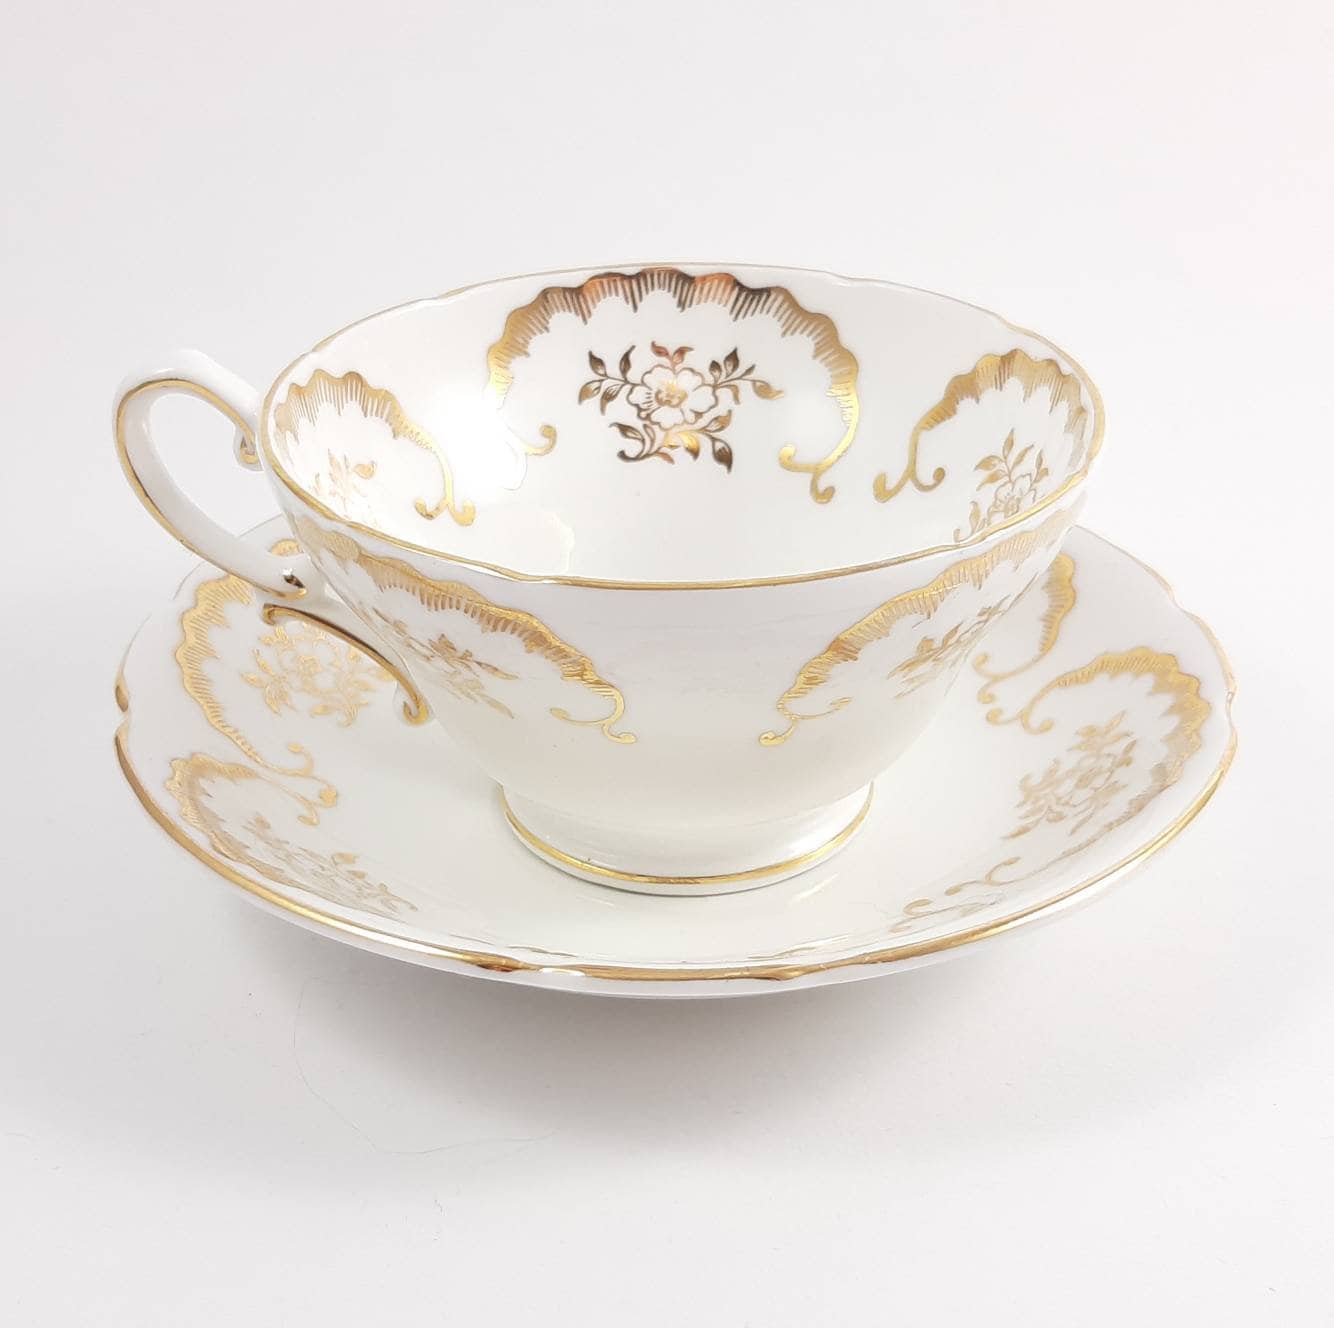 Stanley Tea Cup and Saucer, Gold Tea Cup, Yellow Blue Gold Teacup, Antique  Teacups Vintage, Teatime, English Tea Cups Vintage 